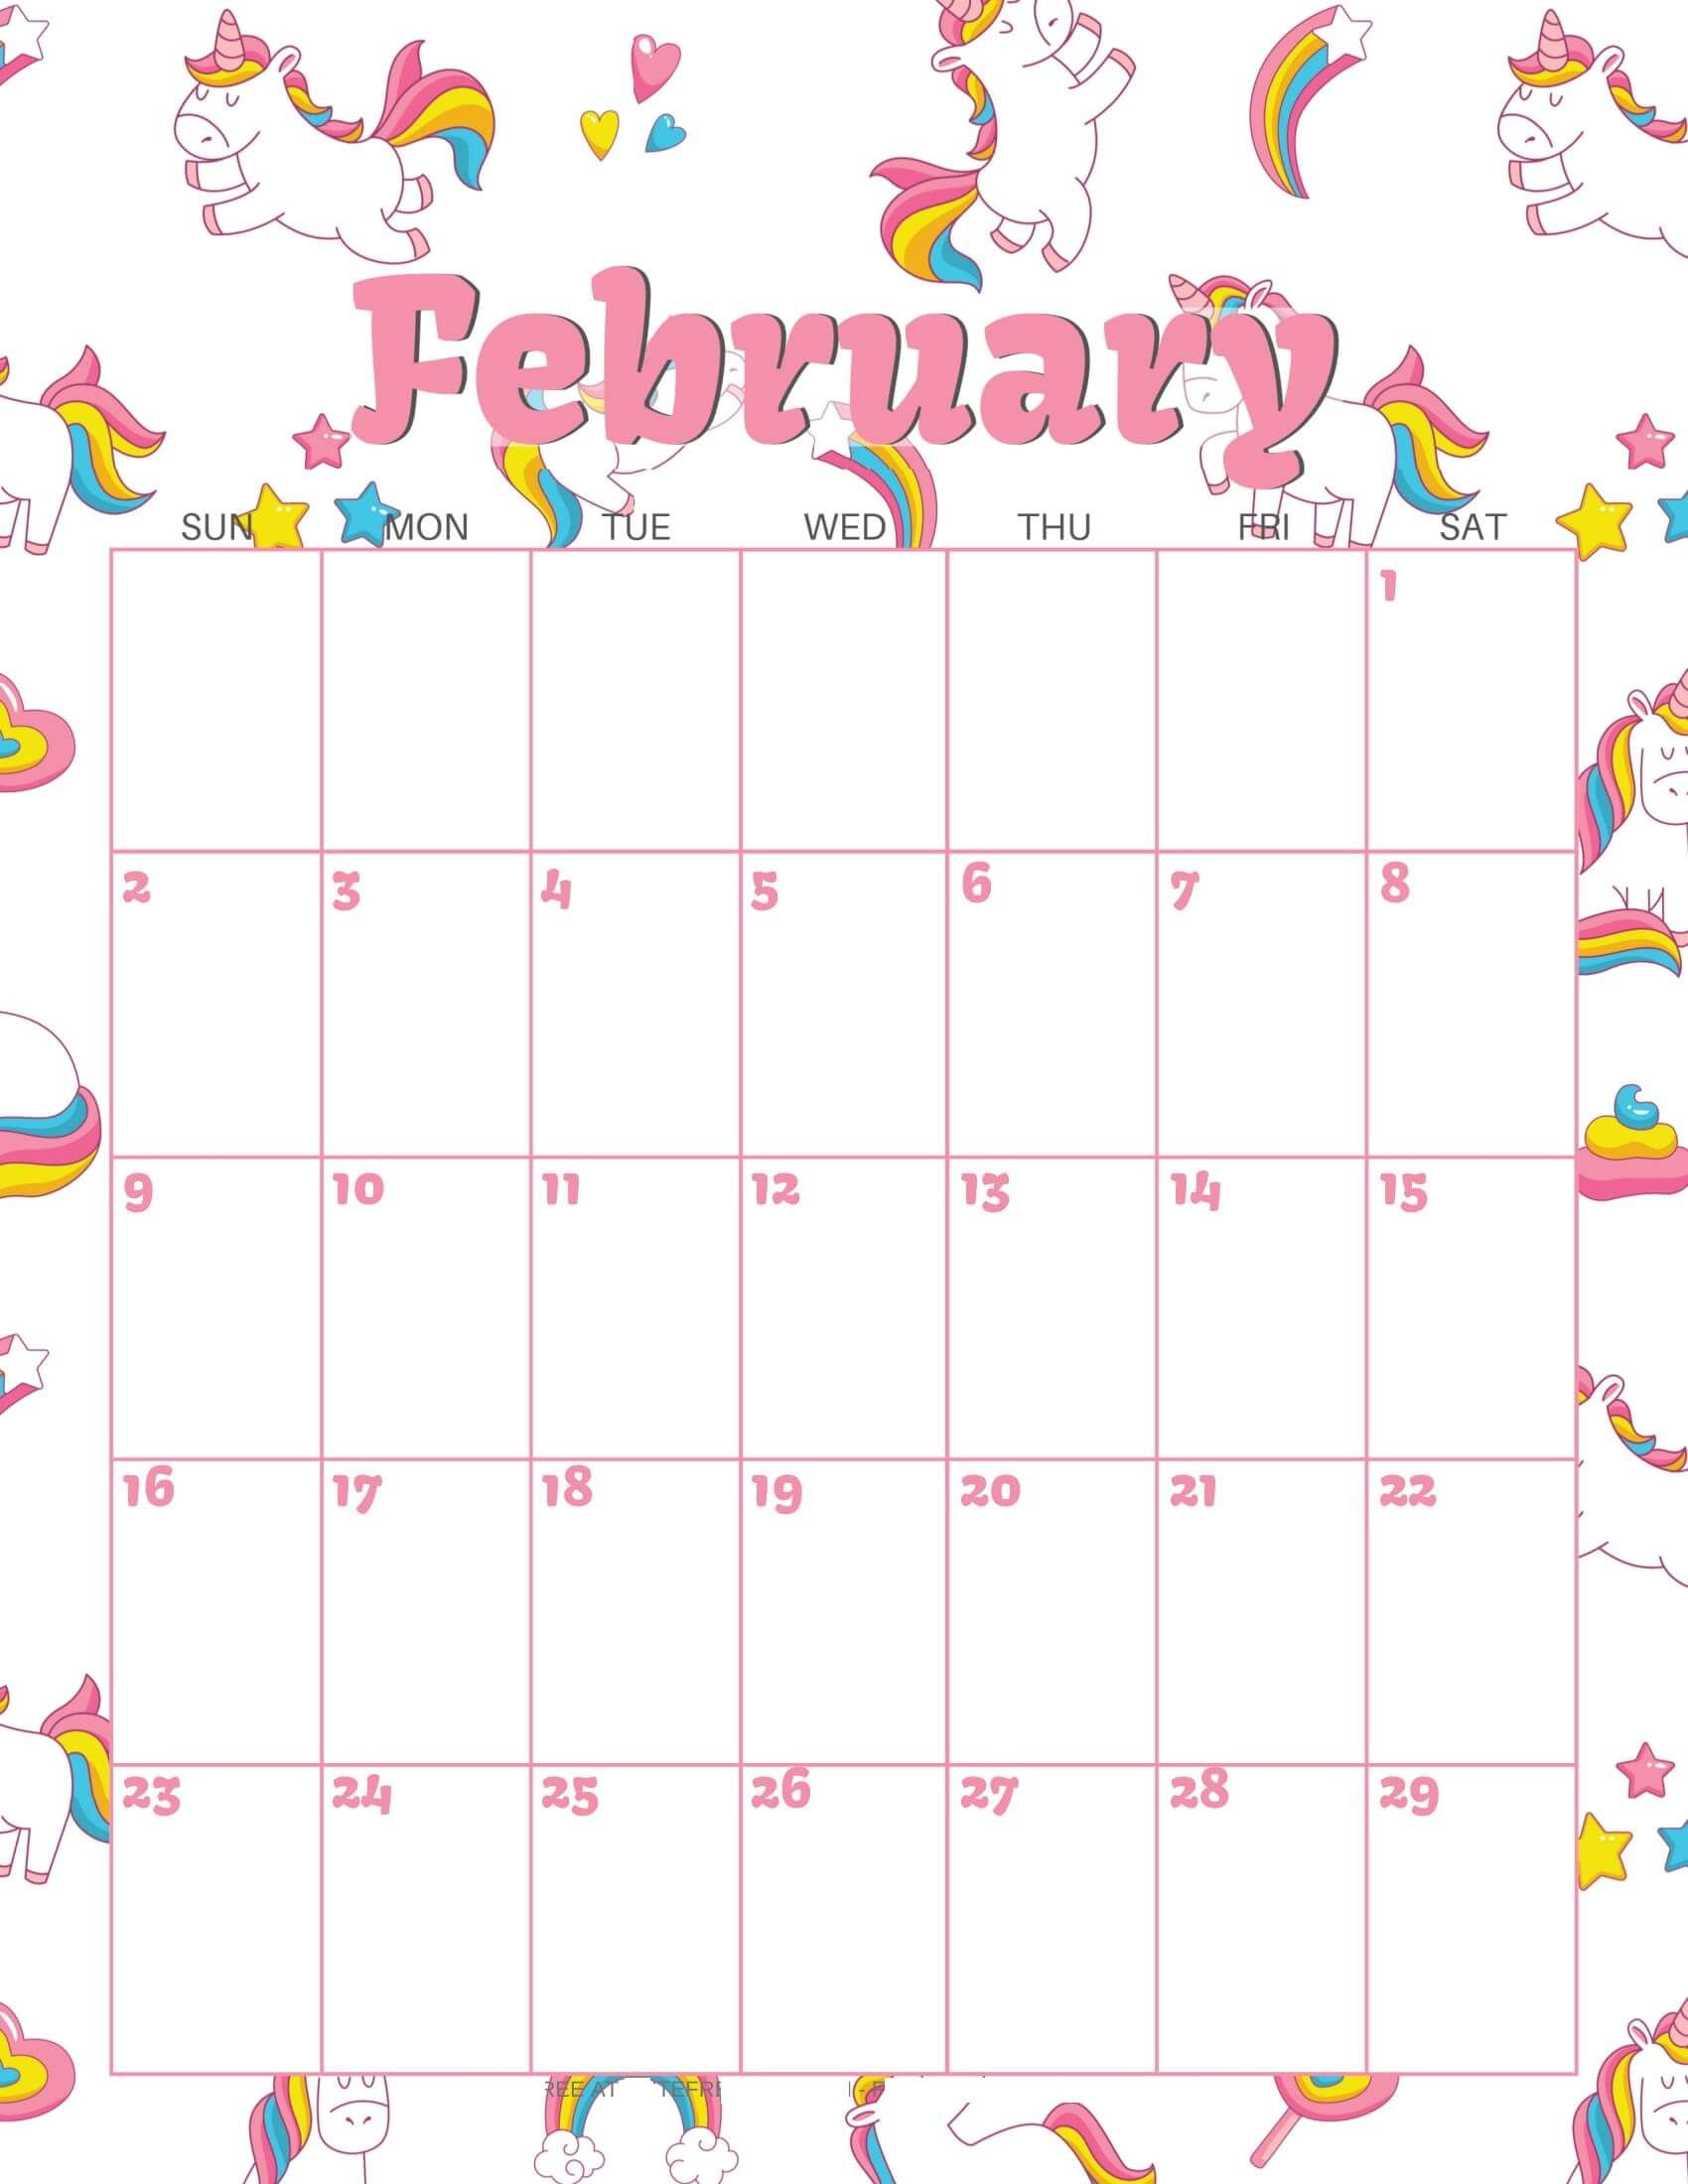 Cute February 2020 Calendar Images | Kids Calendar